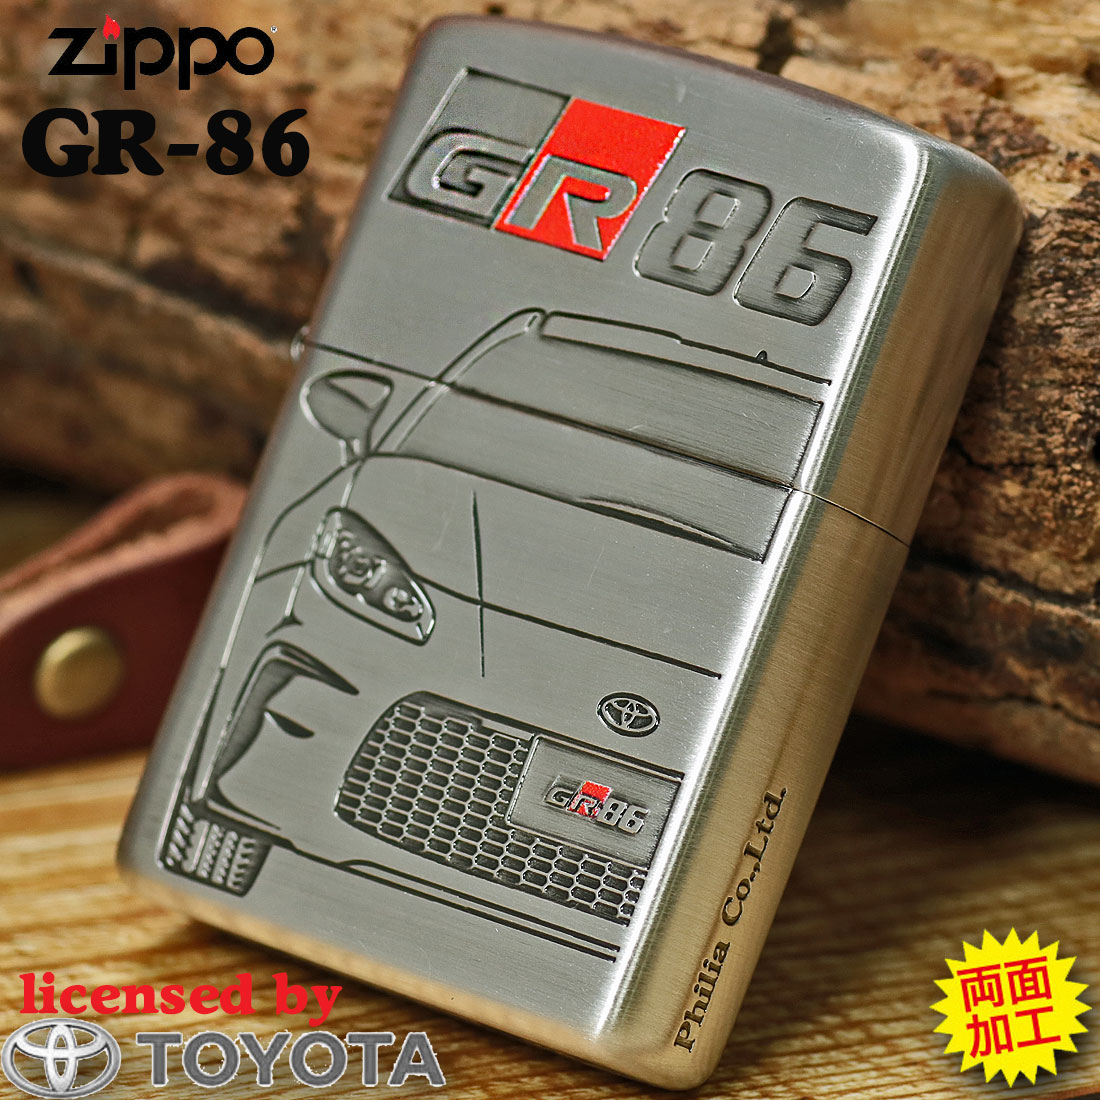 Zippo ジッポ ジッポー ライター TOYOTA OFFICIAL LICENSED PRODUCT GR86-